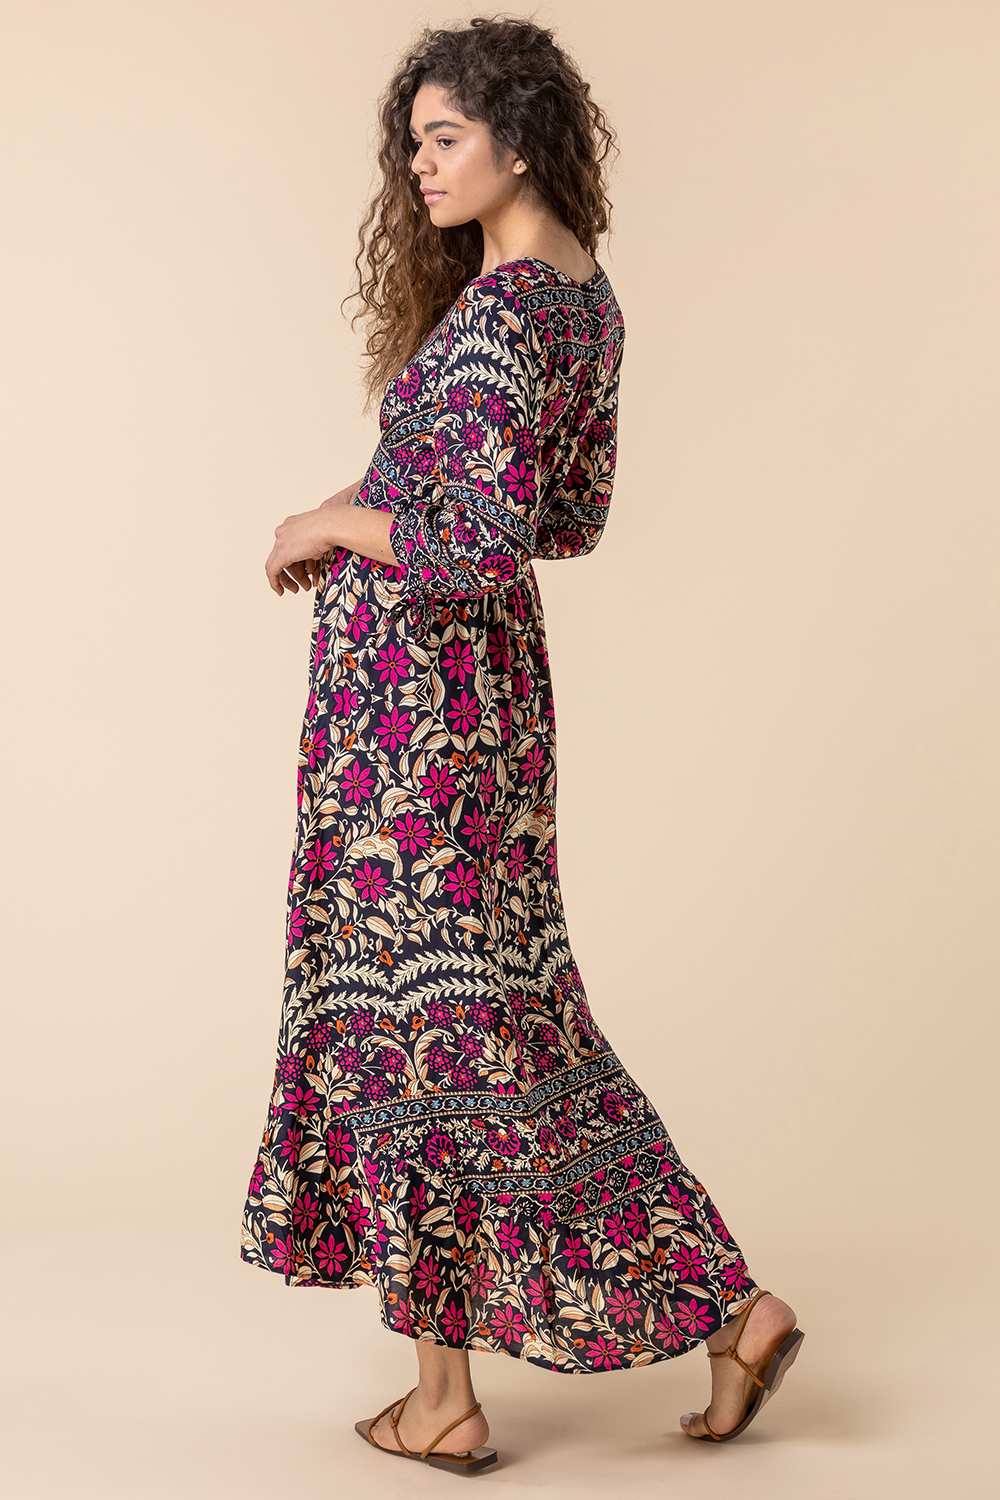 MAGENTA Floral Border Print Maxi Dress, Image 3 of 5